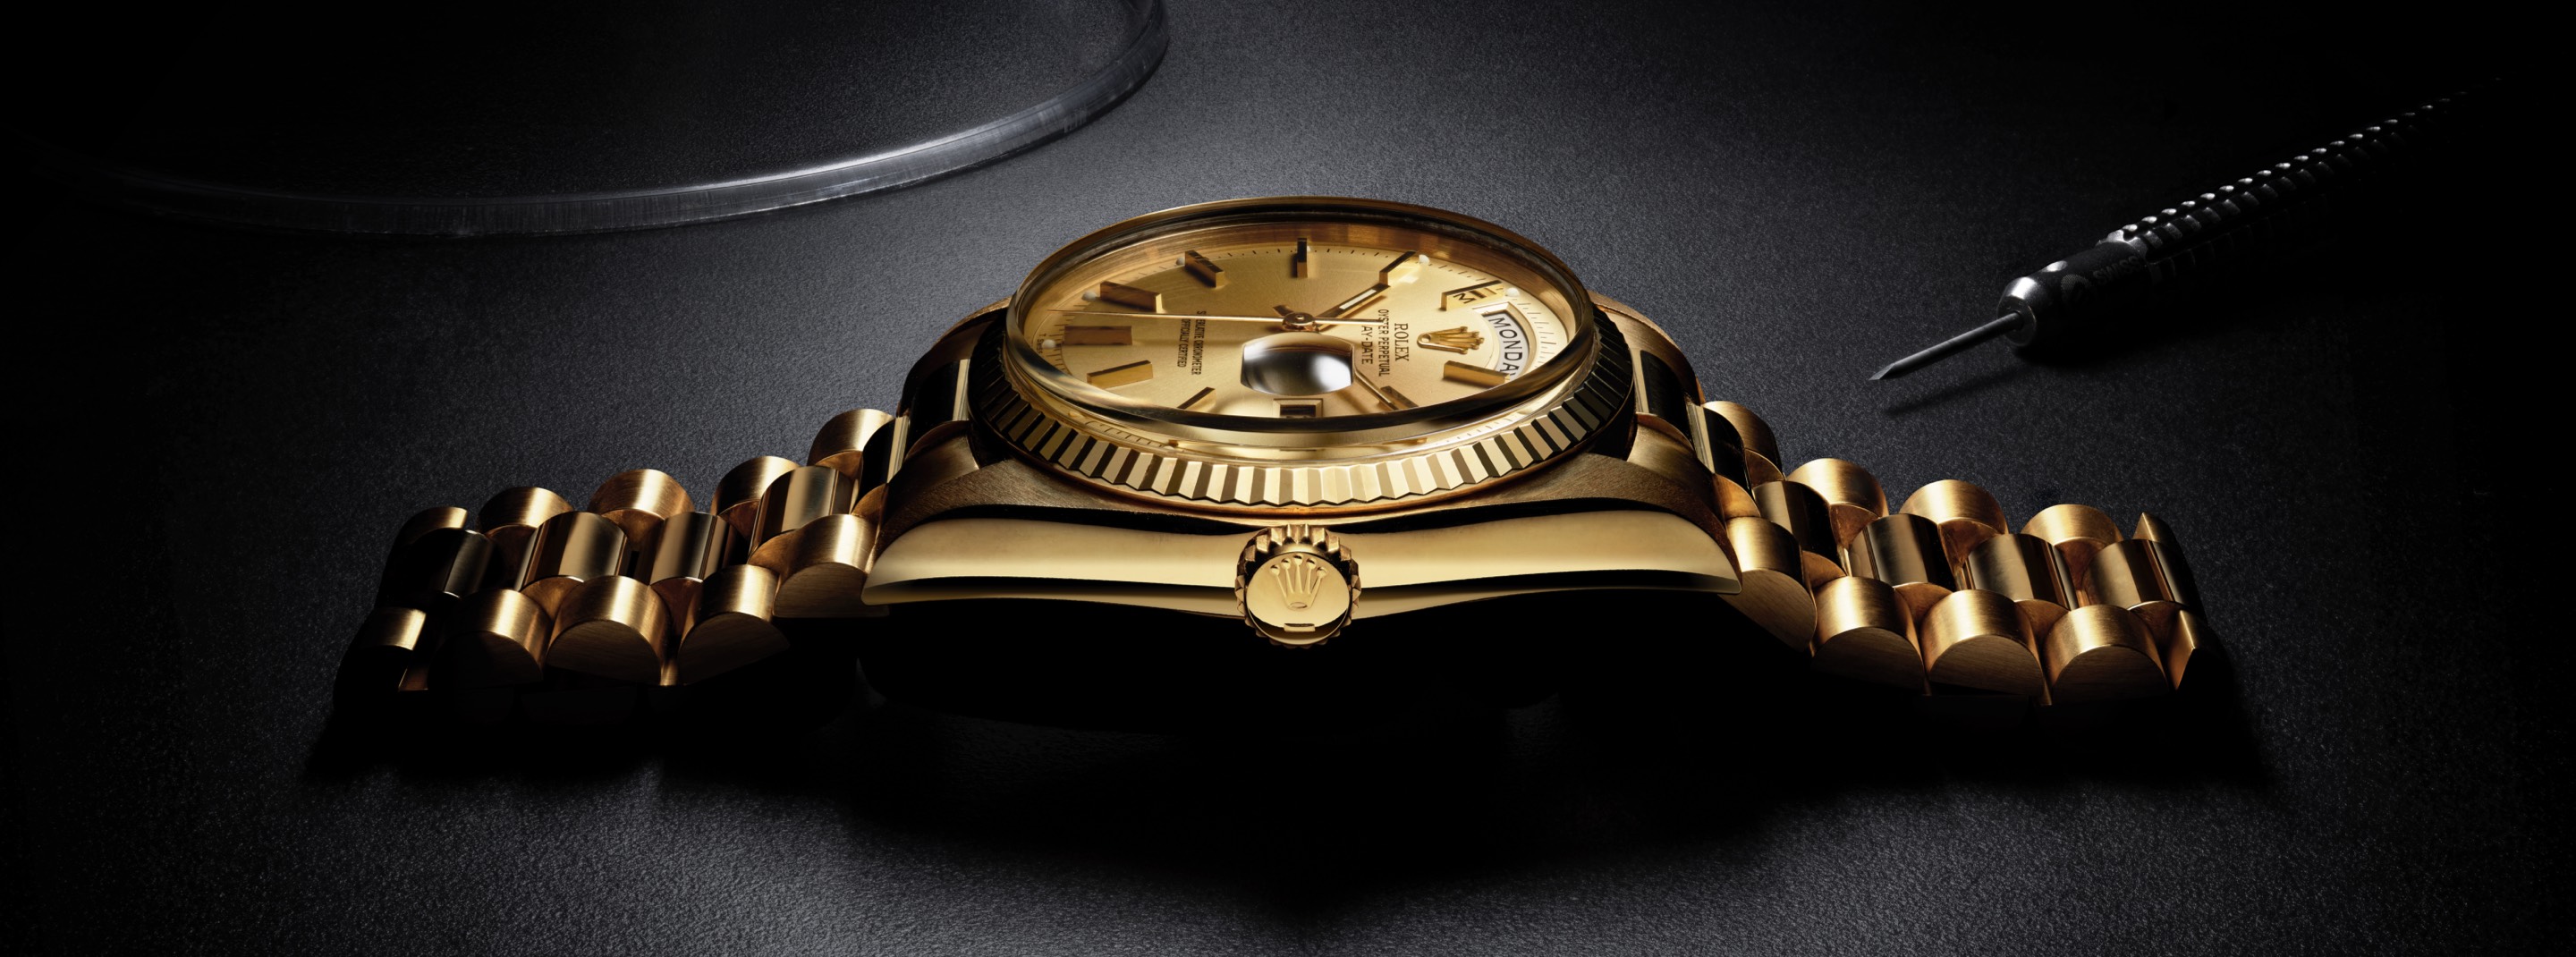 Rolex gold link strap watch side profile